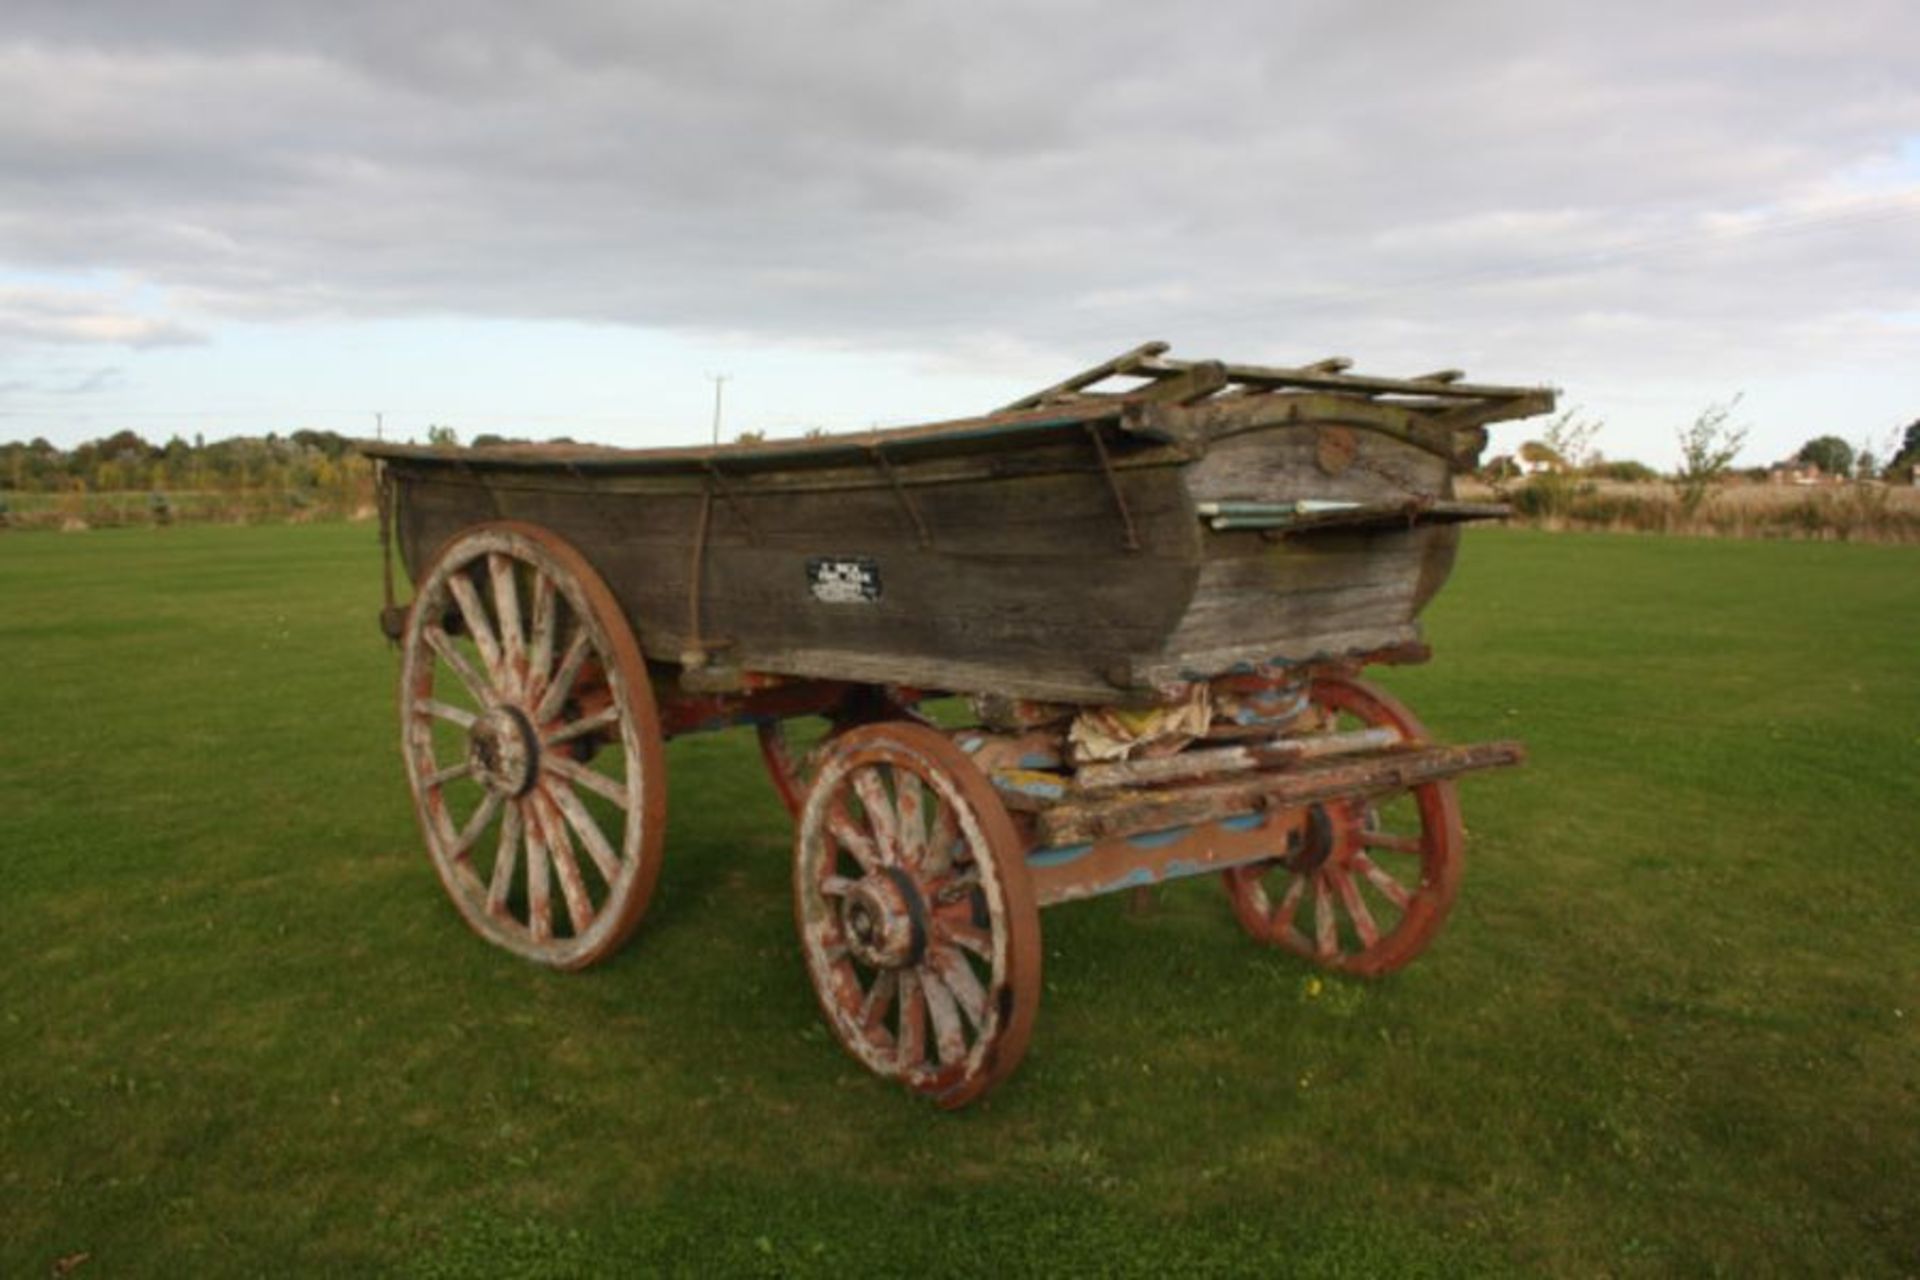 E Mack, Pond Farm, Bodham 4 wheel horse drawn wagon, Makers - Dobbs Bros, Mattishall